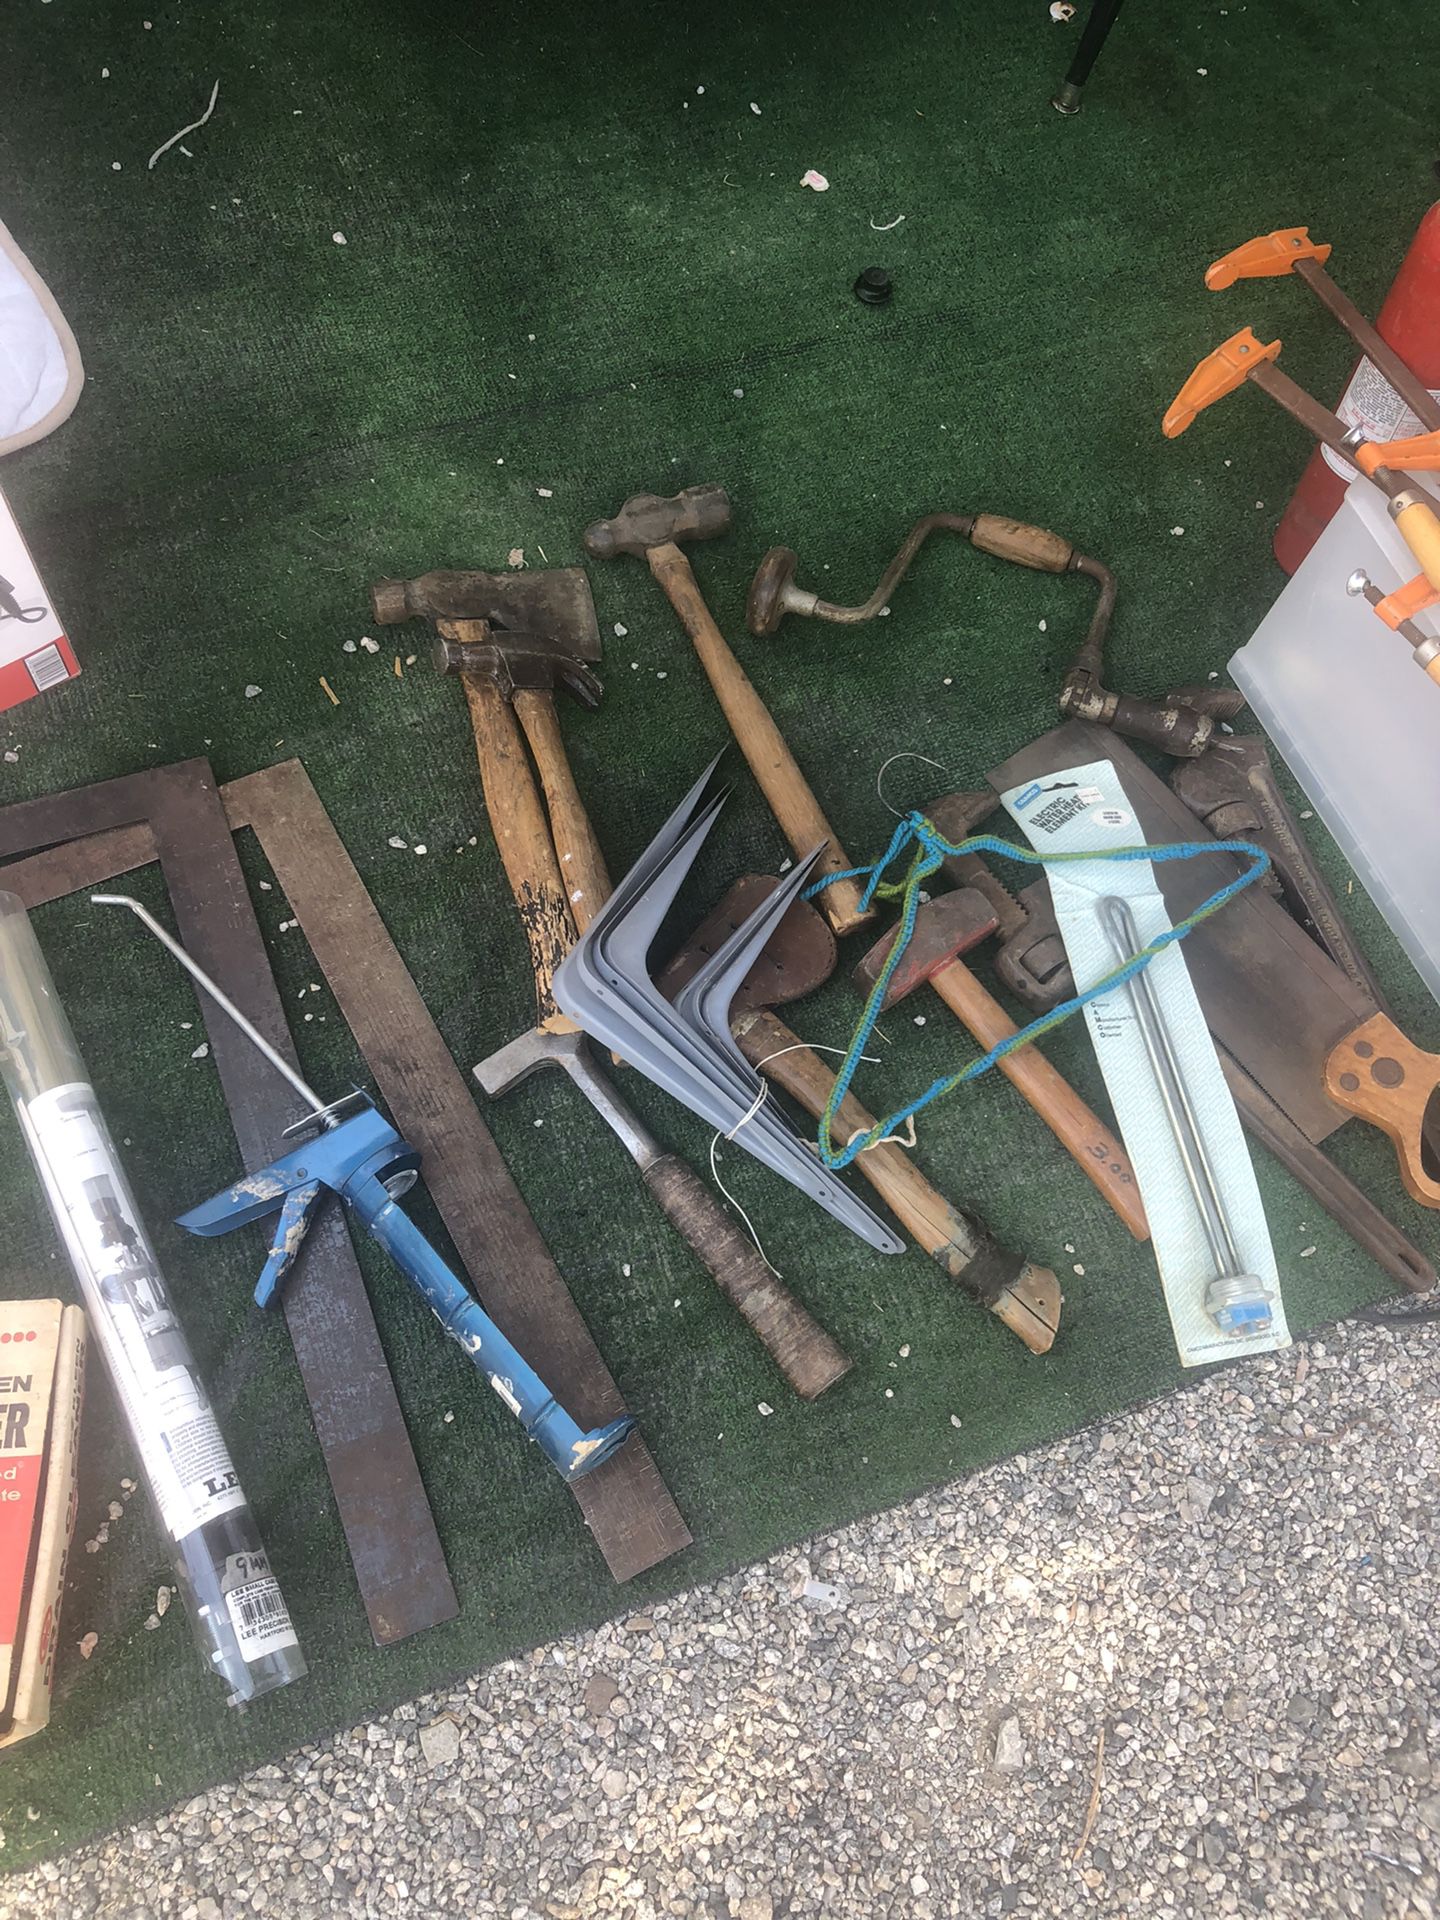 Hammers Tools